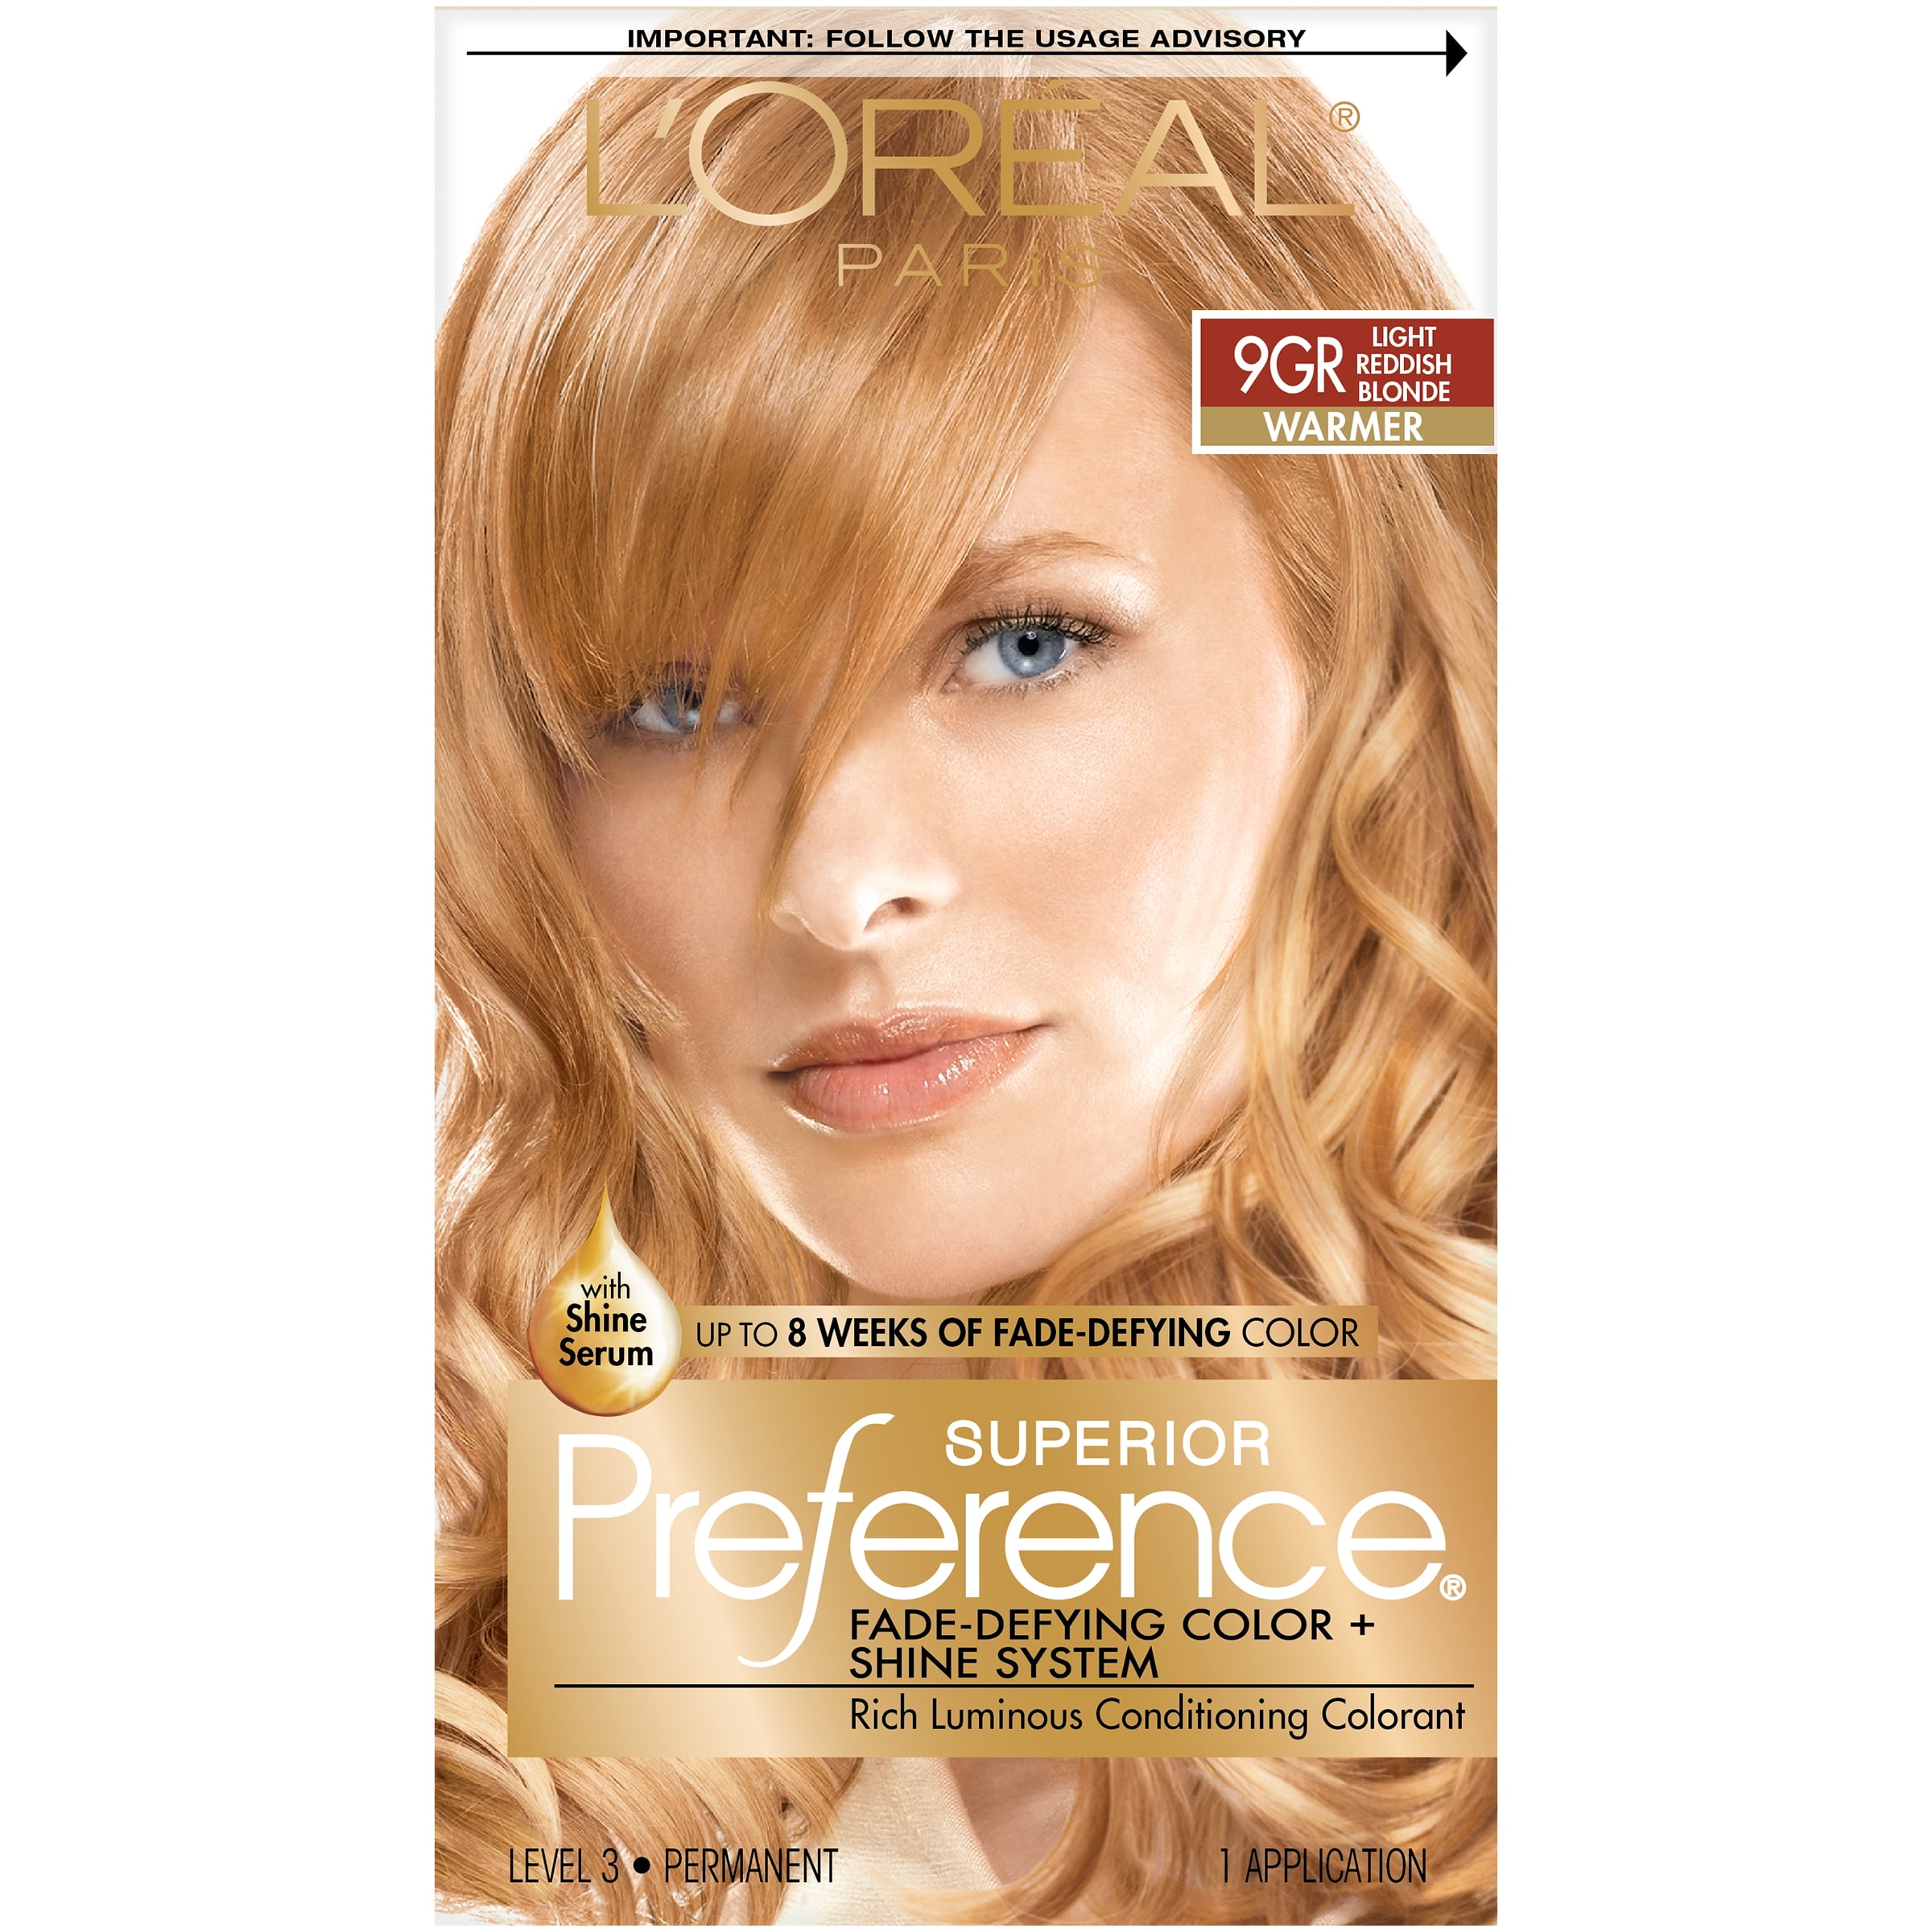 L'Oreal Paris Superior Preference Fade-Defying Shine Permanent Hair Color,  9GR Light Golden Reddish Blonde, 1 Kit 